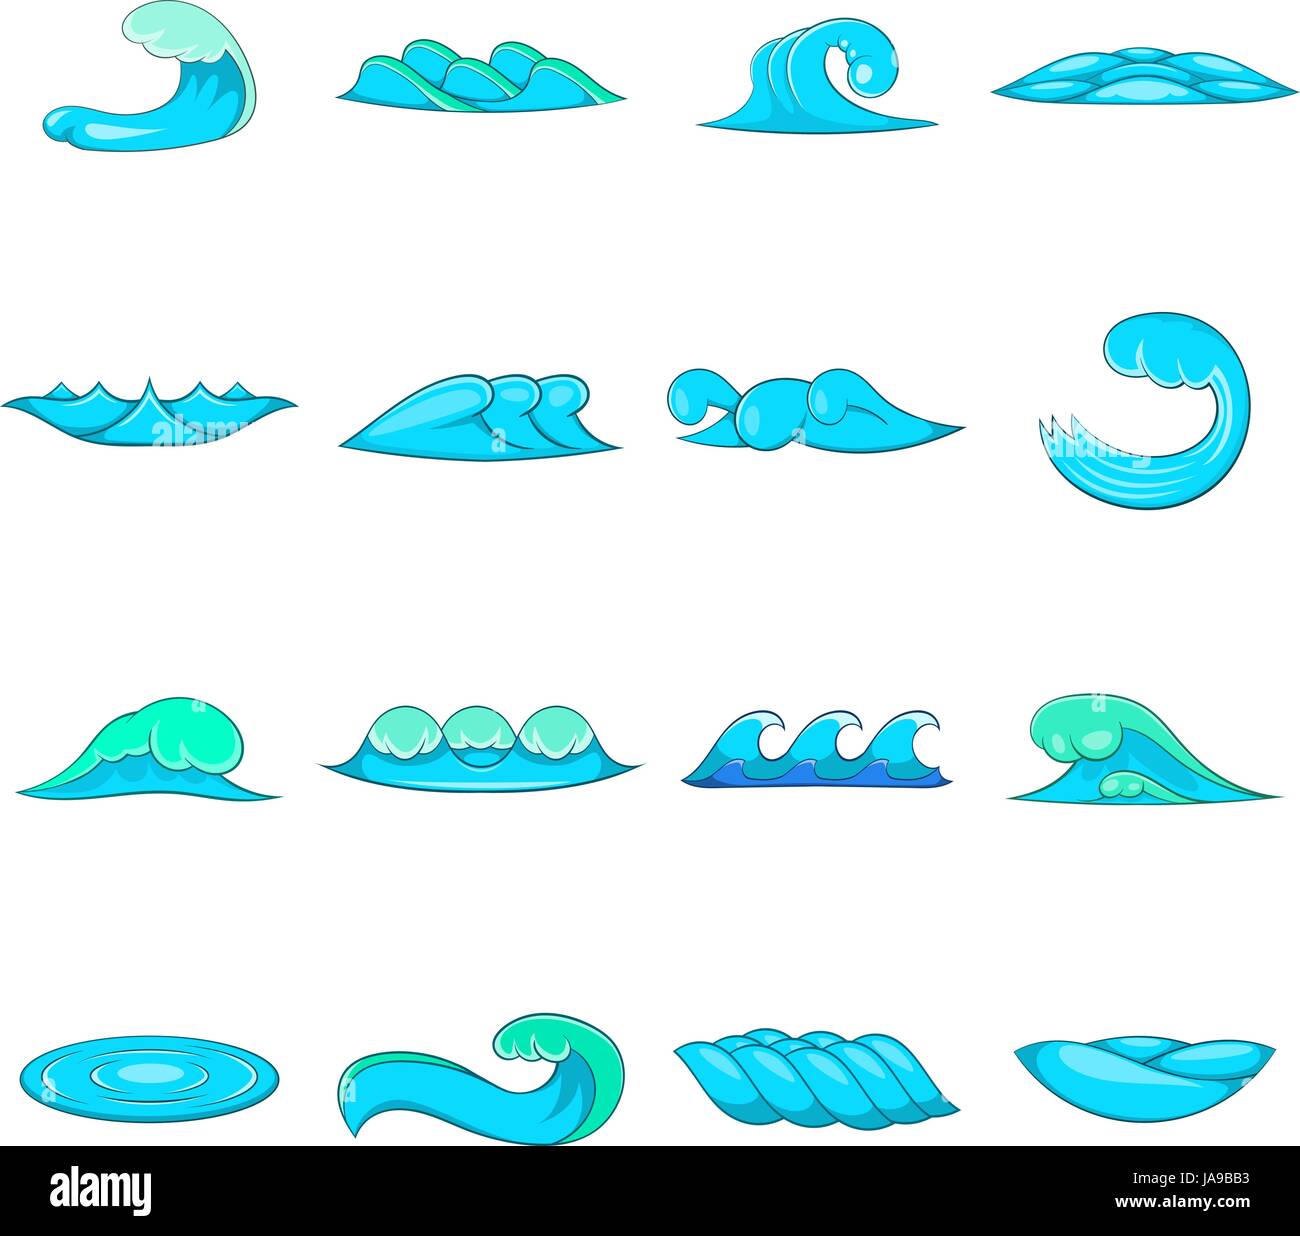 Waves icons set, cartoon style Stock Vector